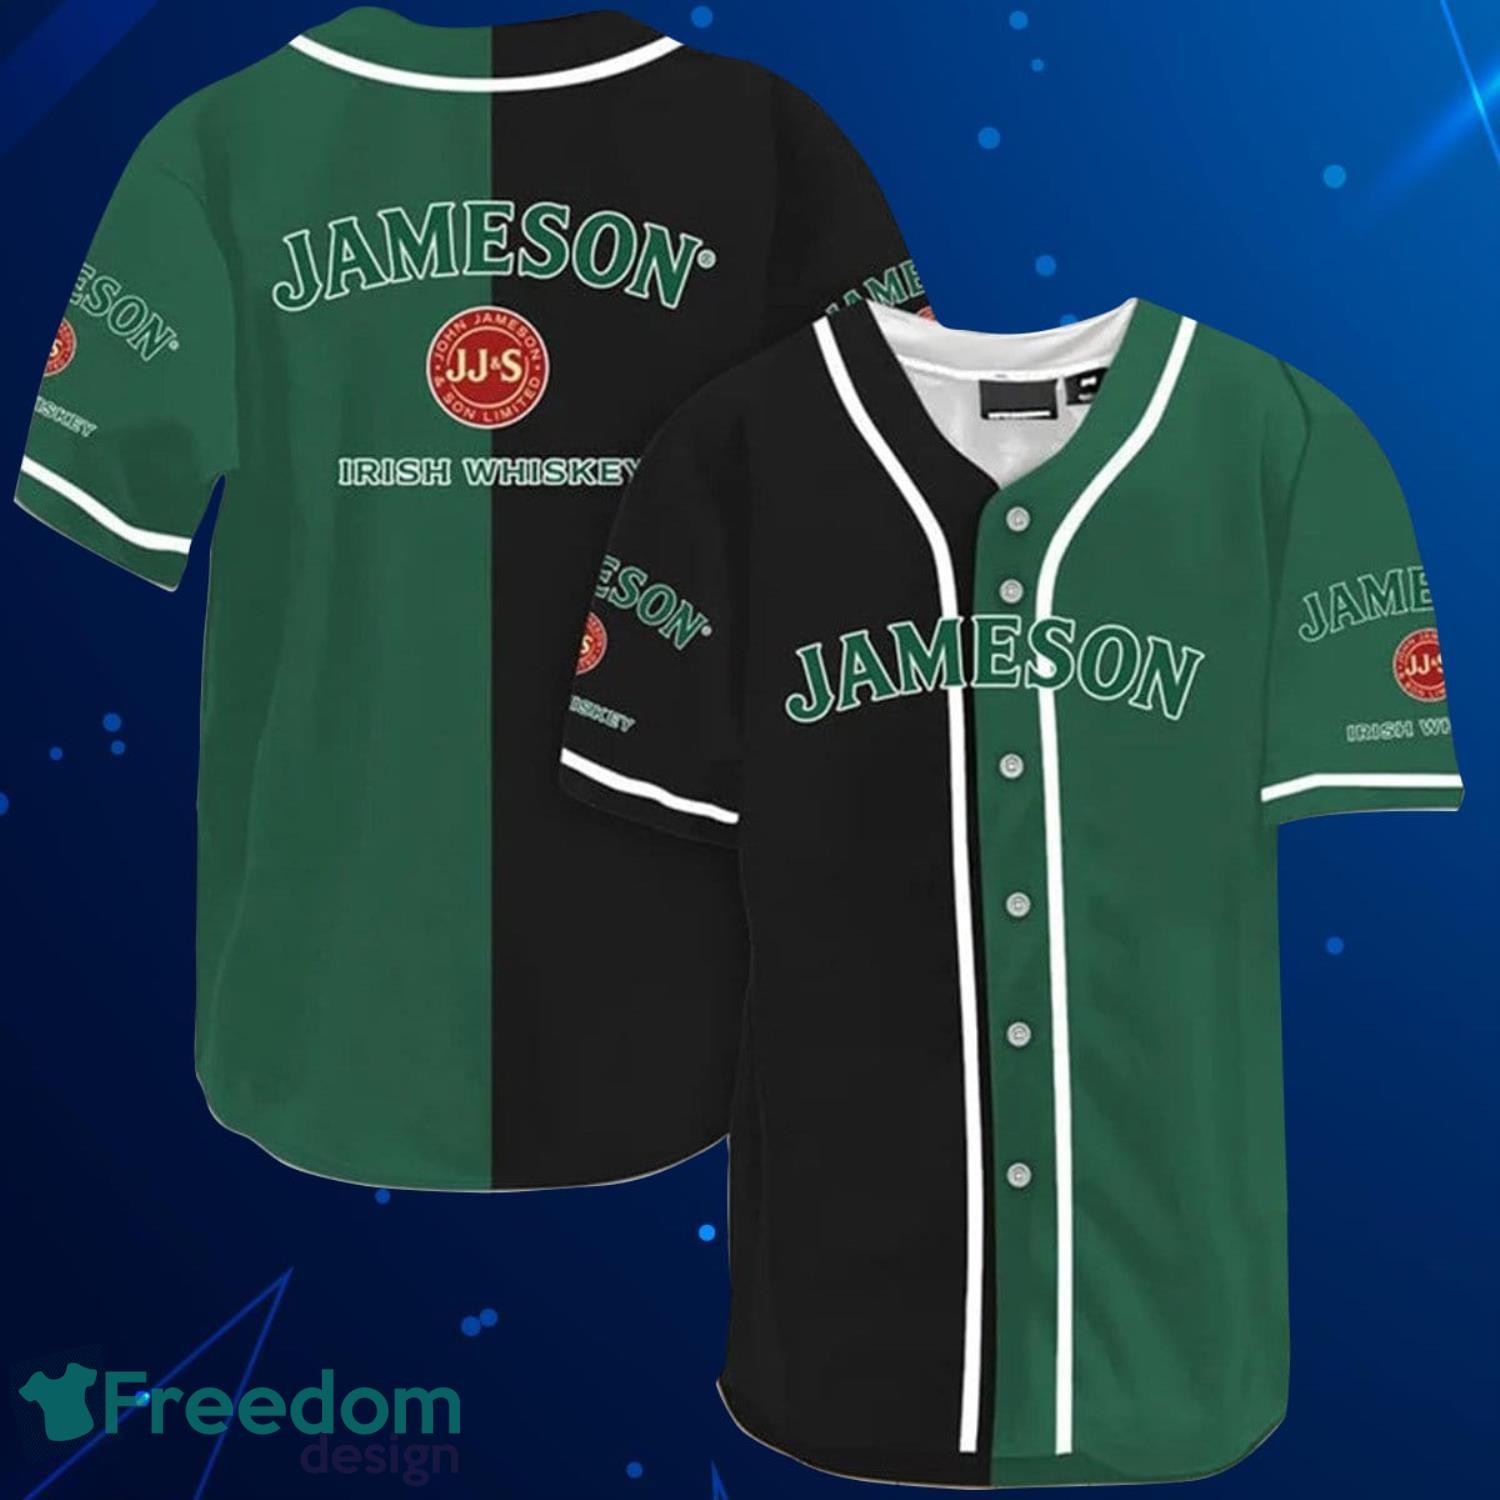 Black And Green Split Jameson Whisky Baseball Jersey Shirt Product Photo 1